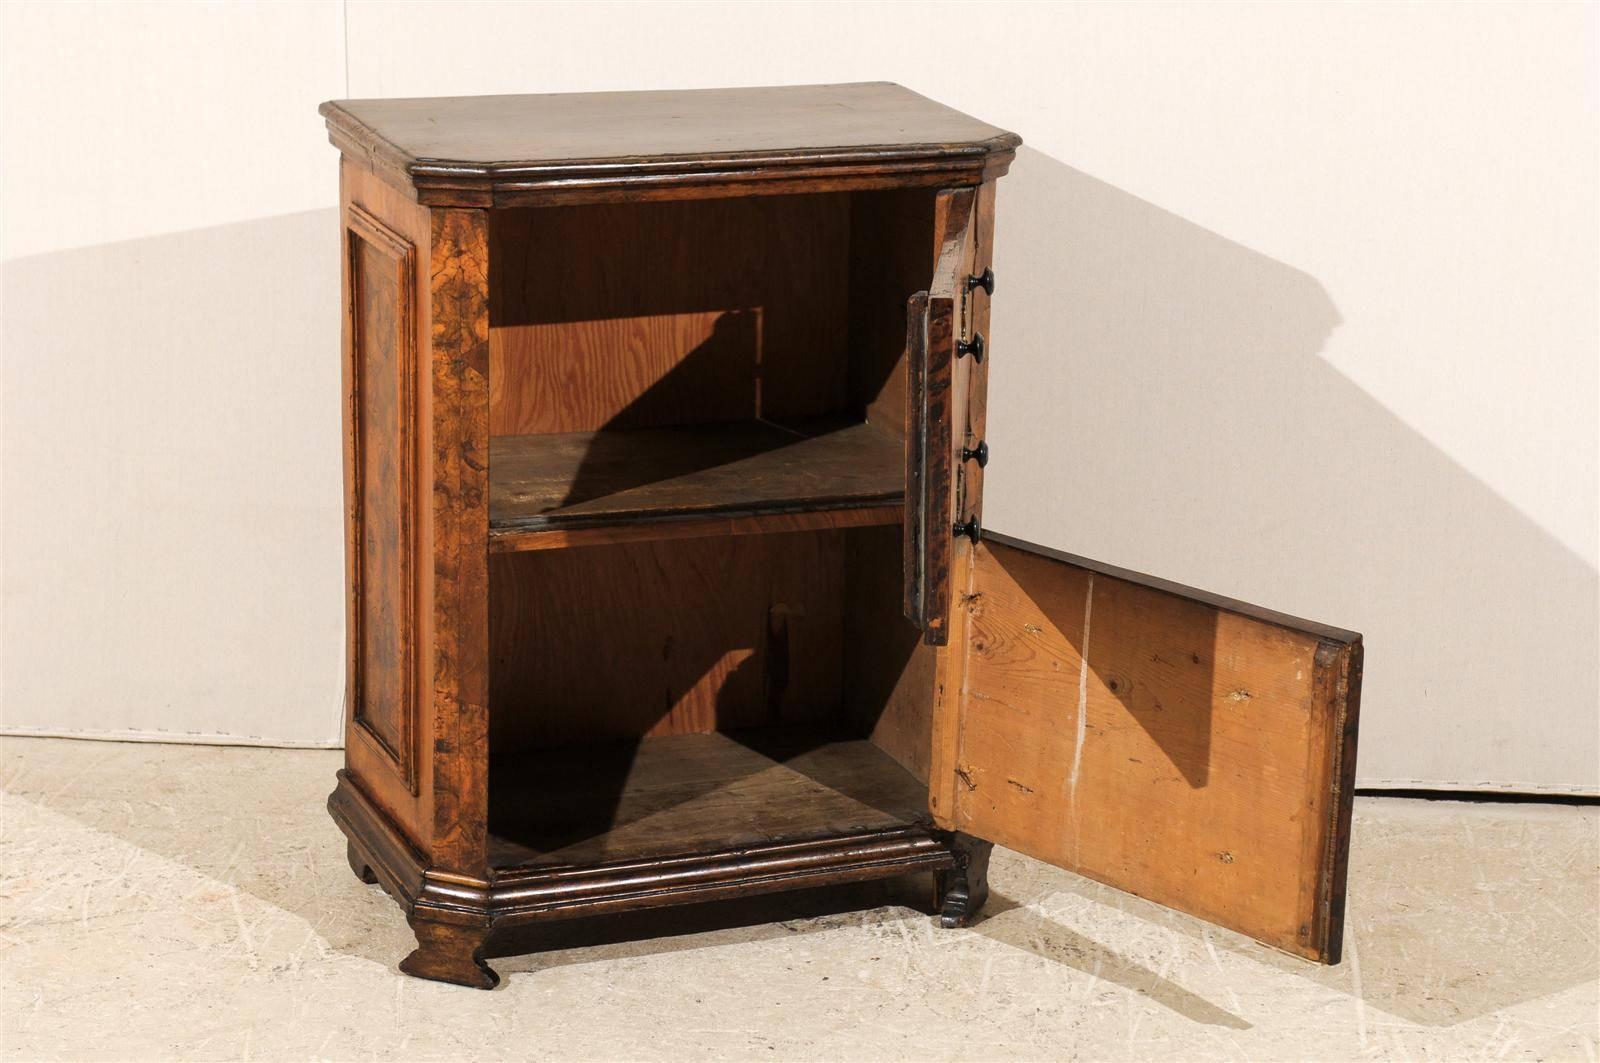 Veneer An Italian Early 19th Century Small Shelf Cabinet with Nice Wood Grain Visible